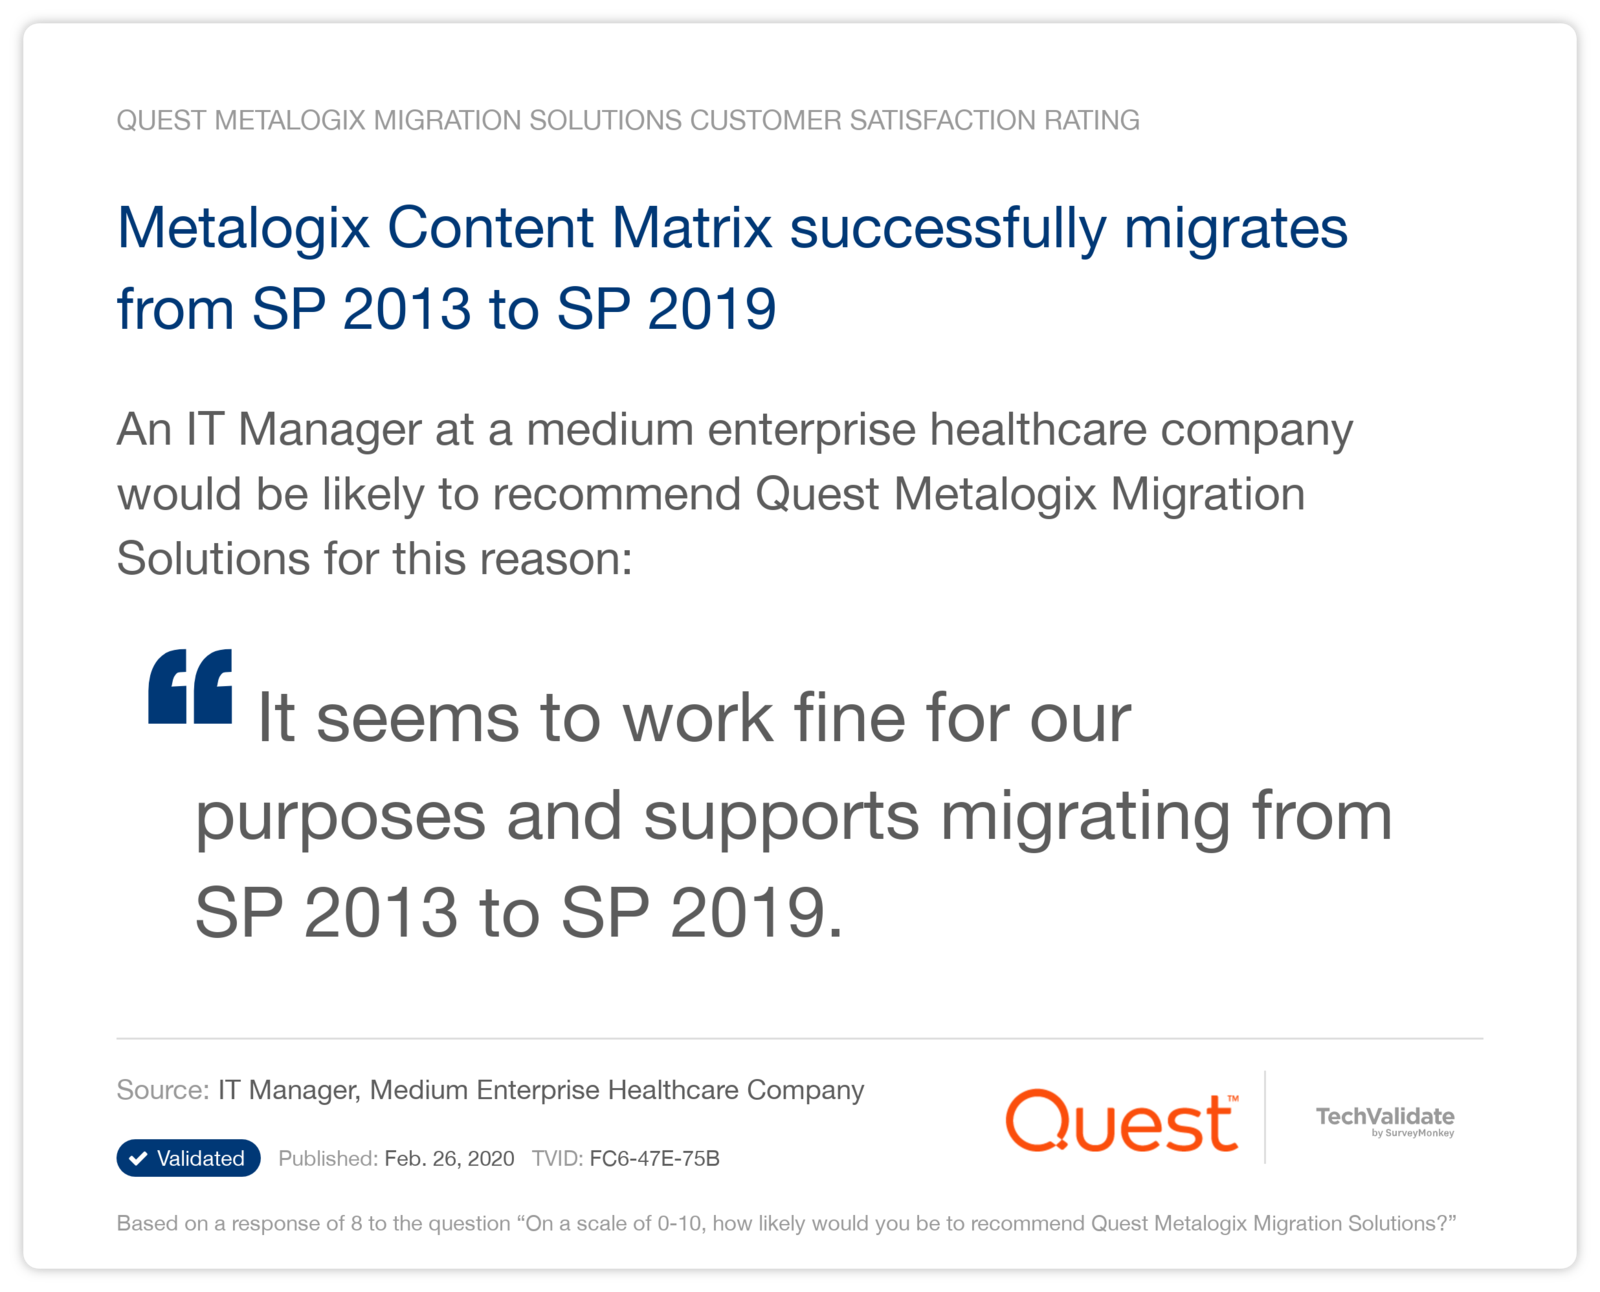 Metalogix Content Matrix successfully migrates from SP 2013 to SP 2019